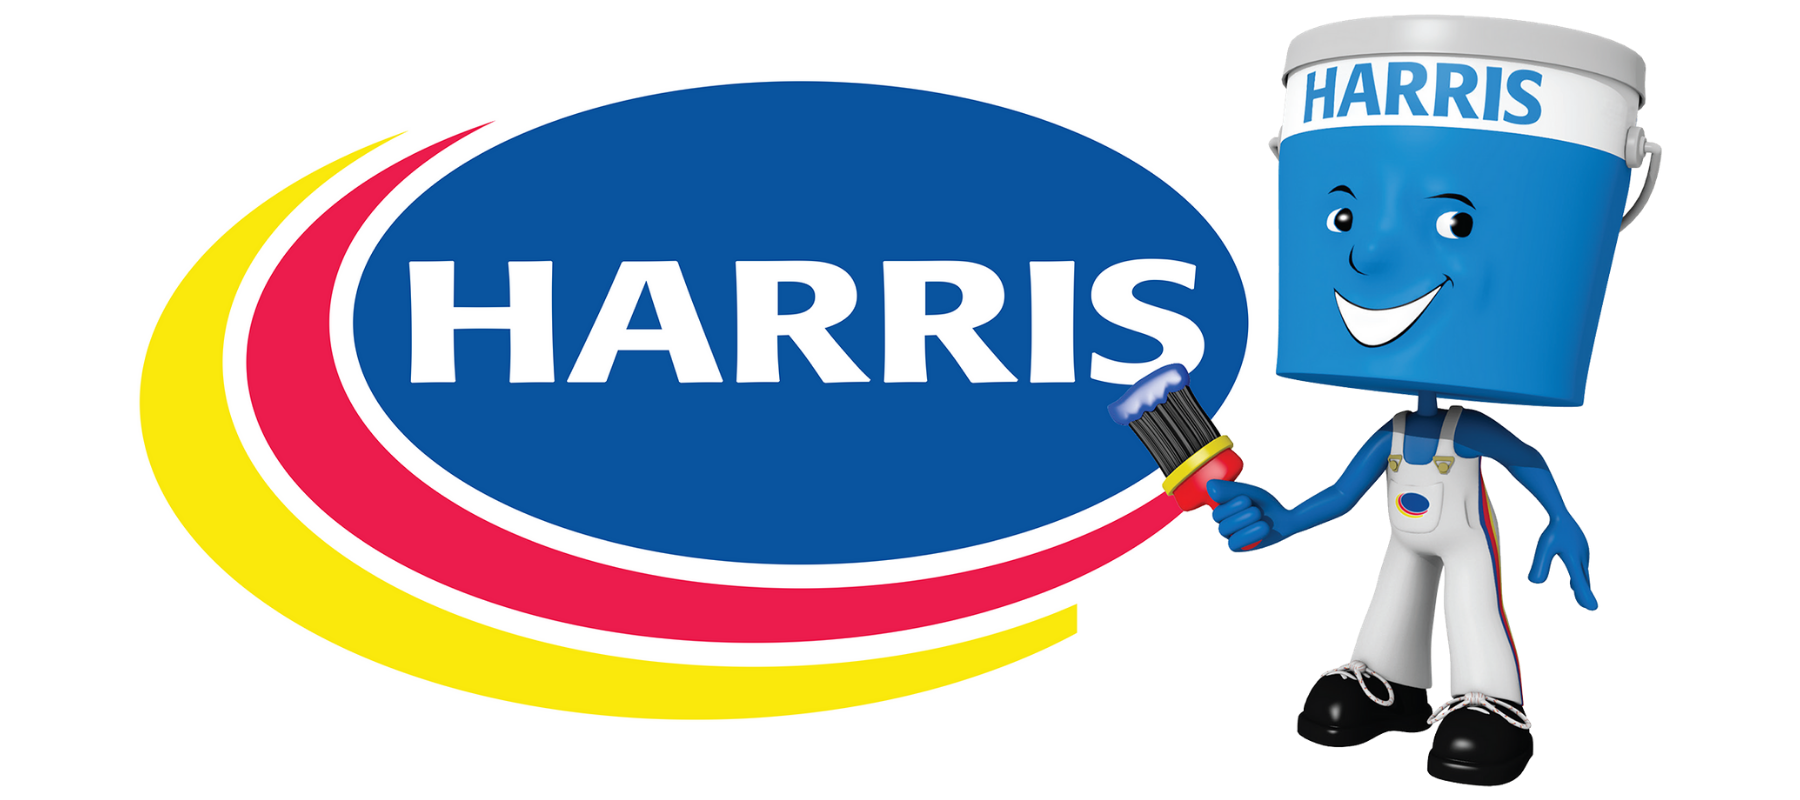 Harris Paints a good corporate image